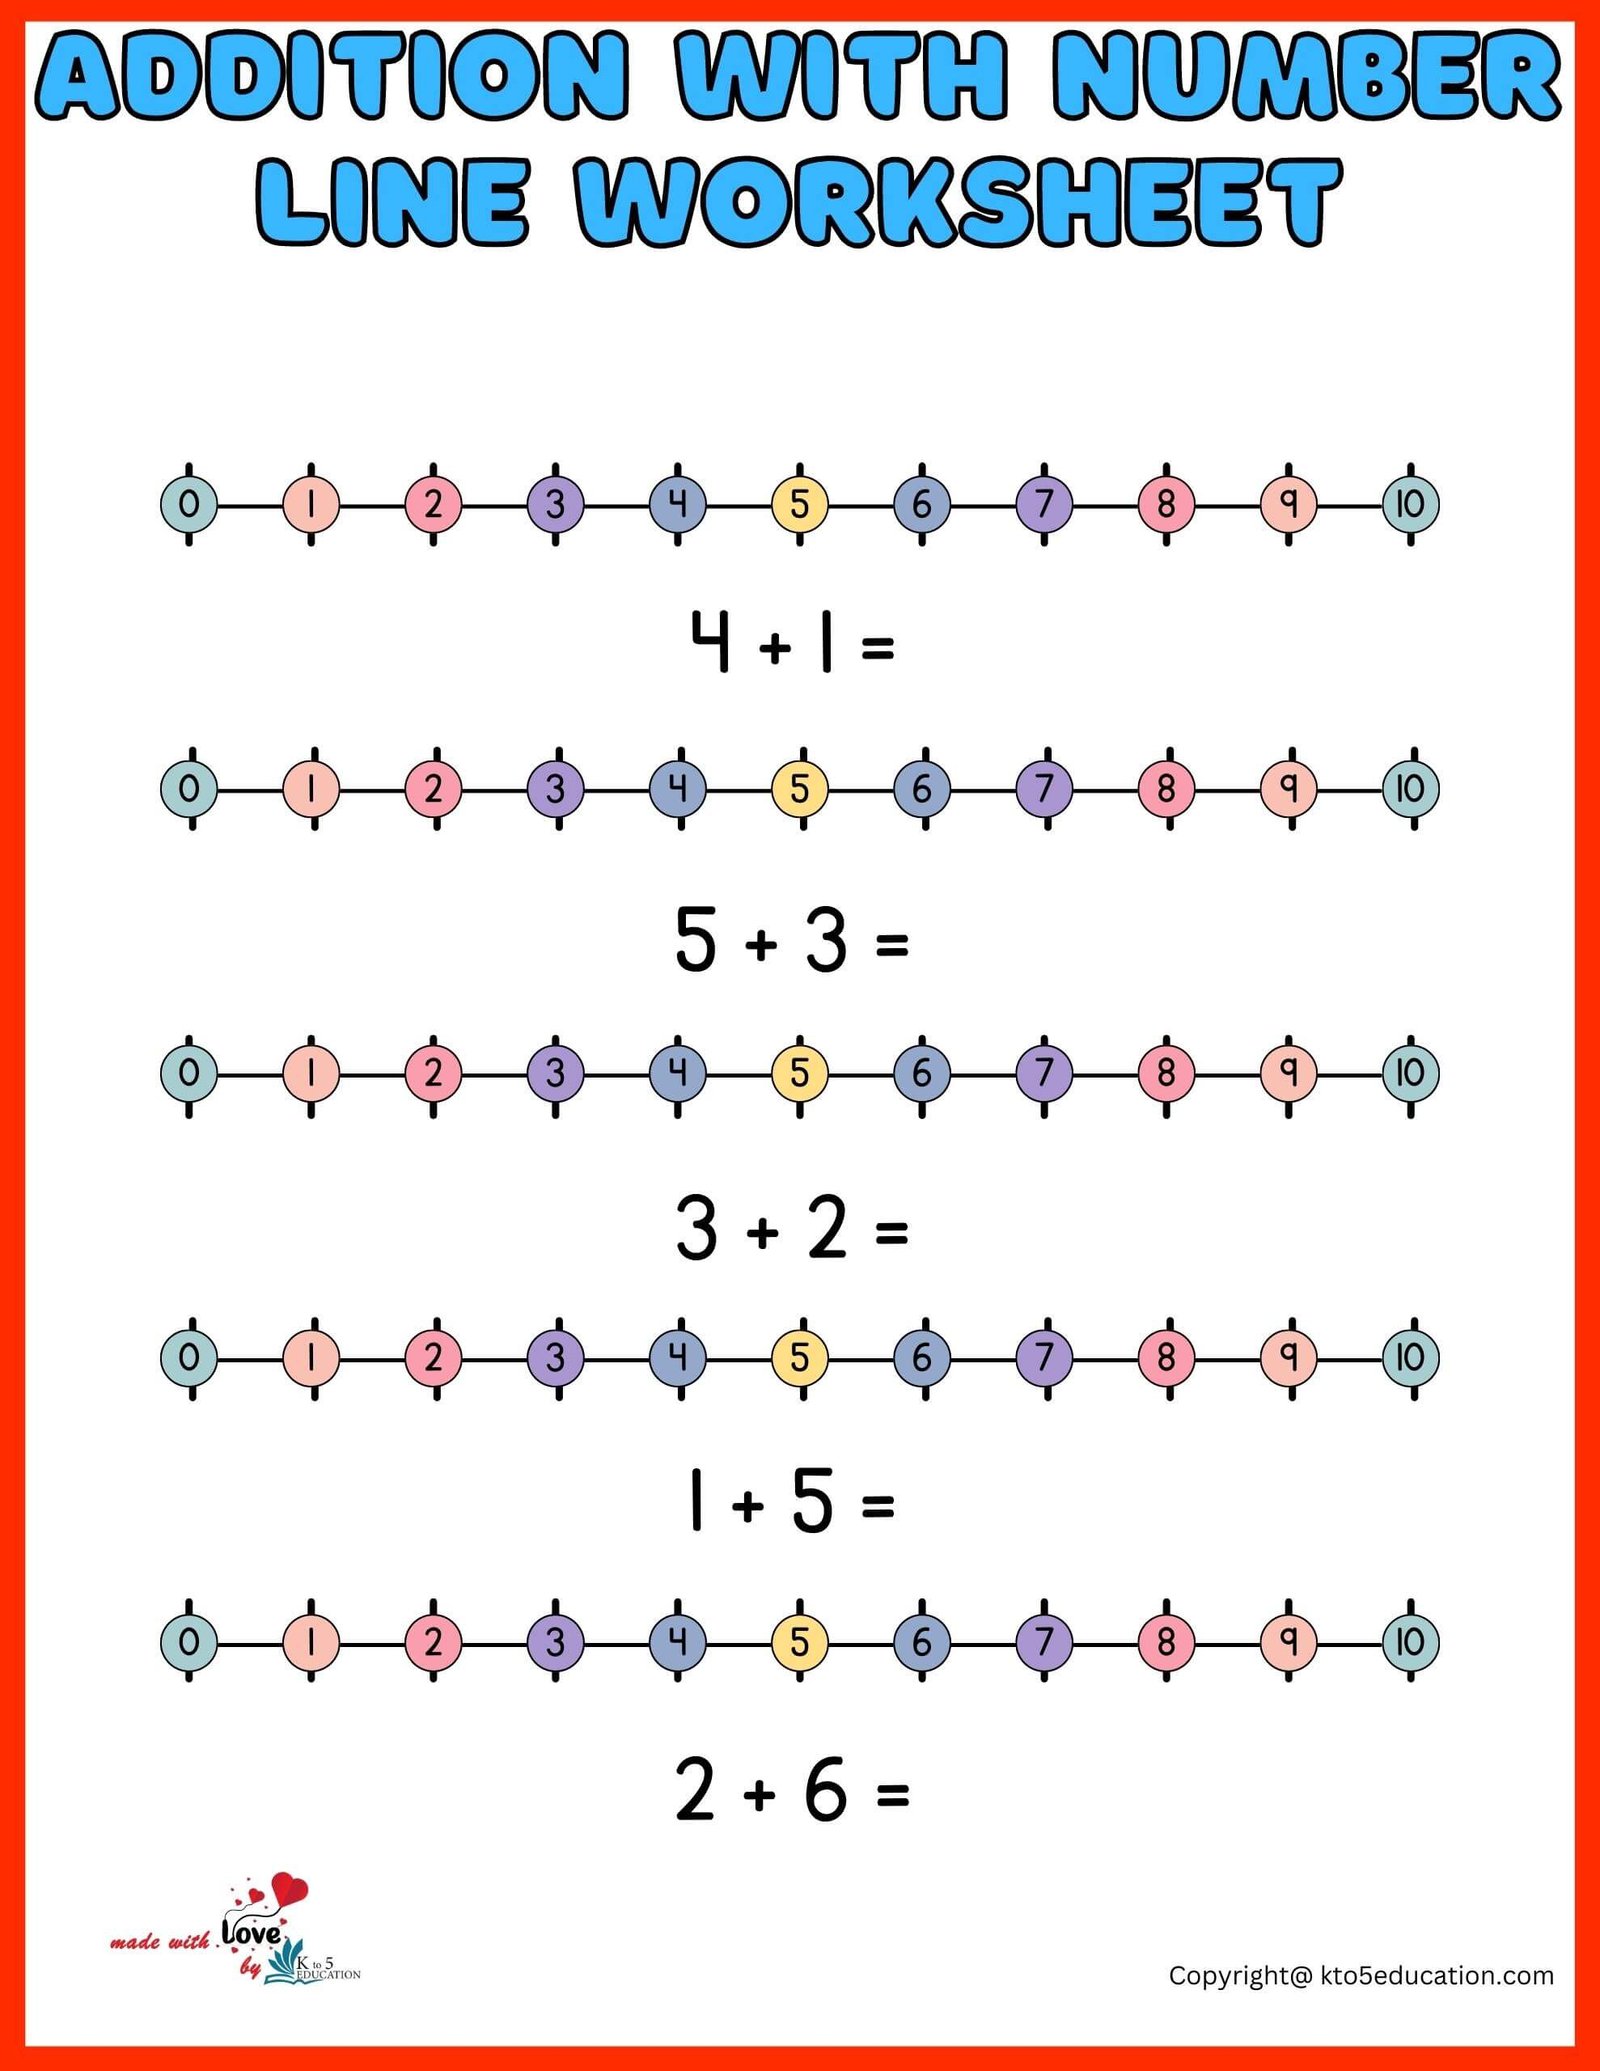 Addition With Number Line Worksheet For Kids